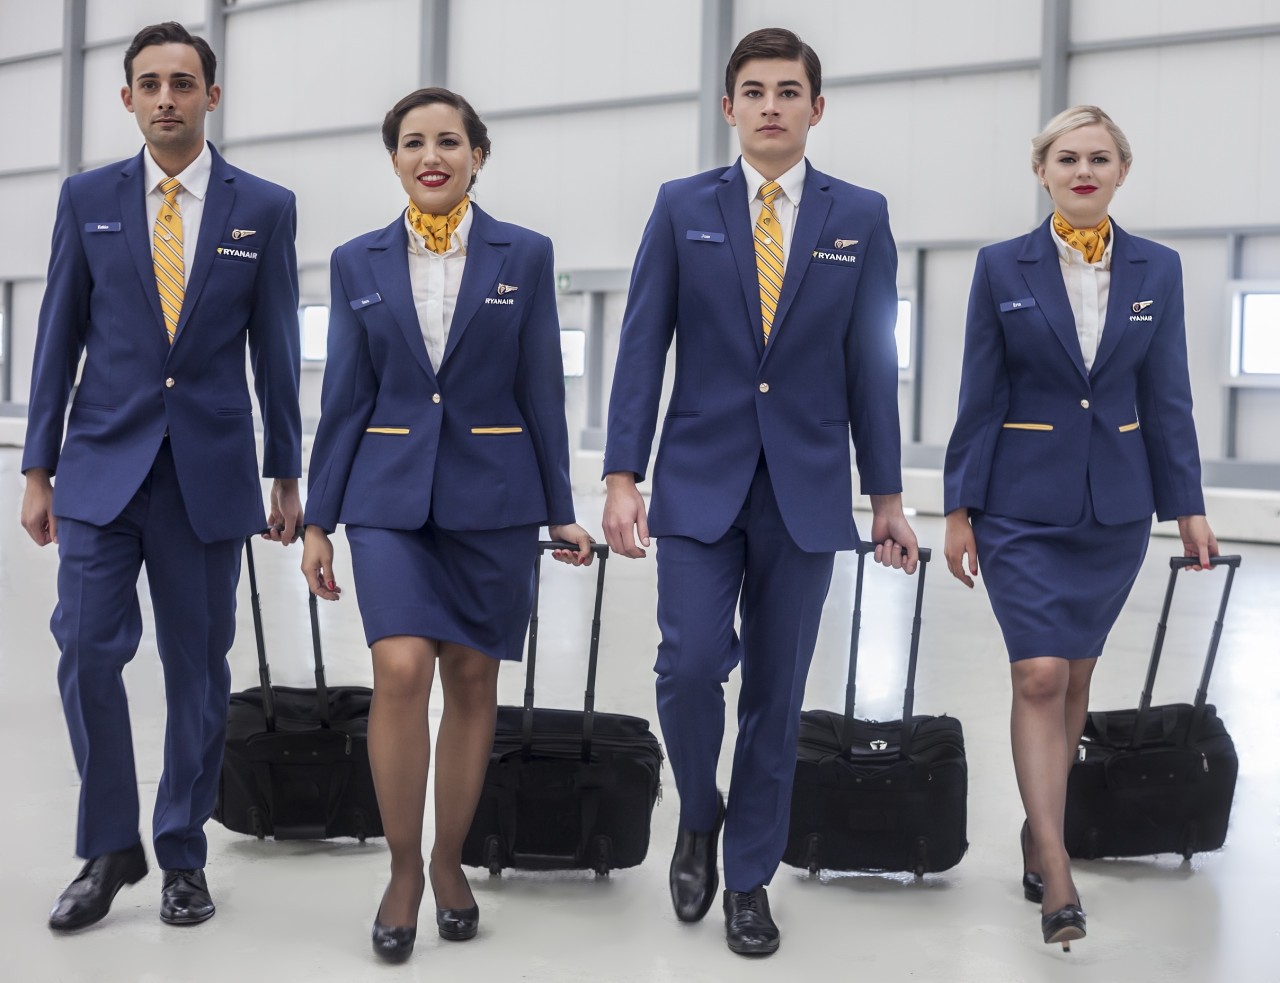 Ryanair-Uniforms-3-1280x983